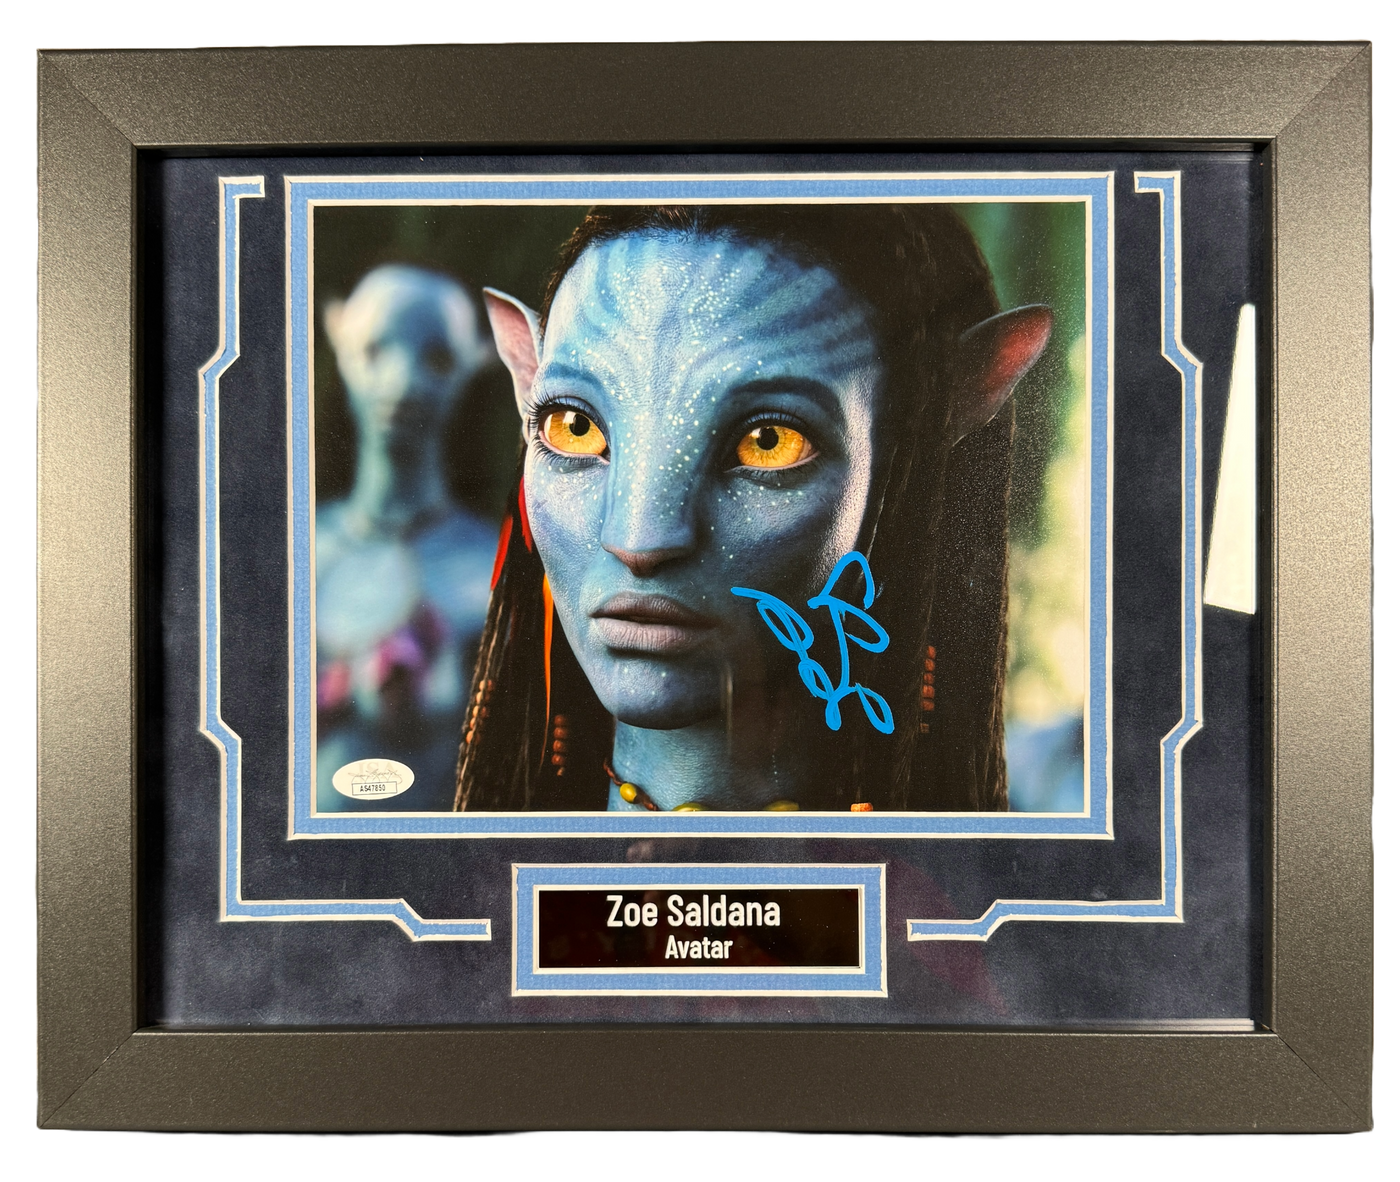 Zoe Saldana Signed and Custom Framed "Avatar" 8x10 Photo Autographed JSA COA